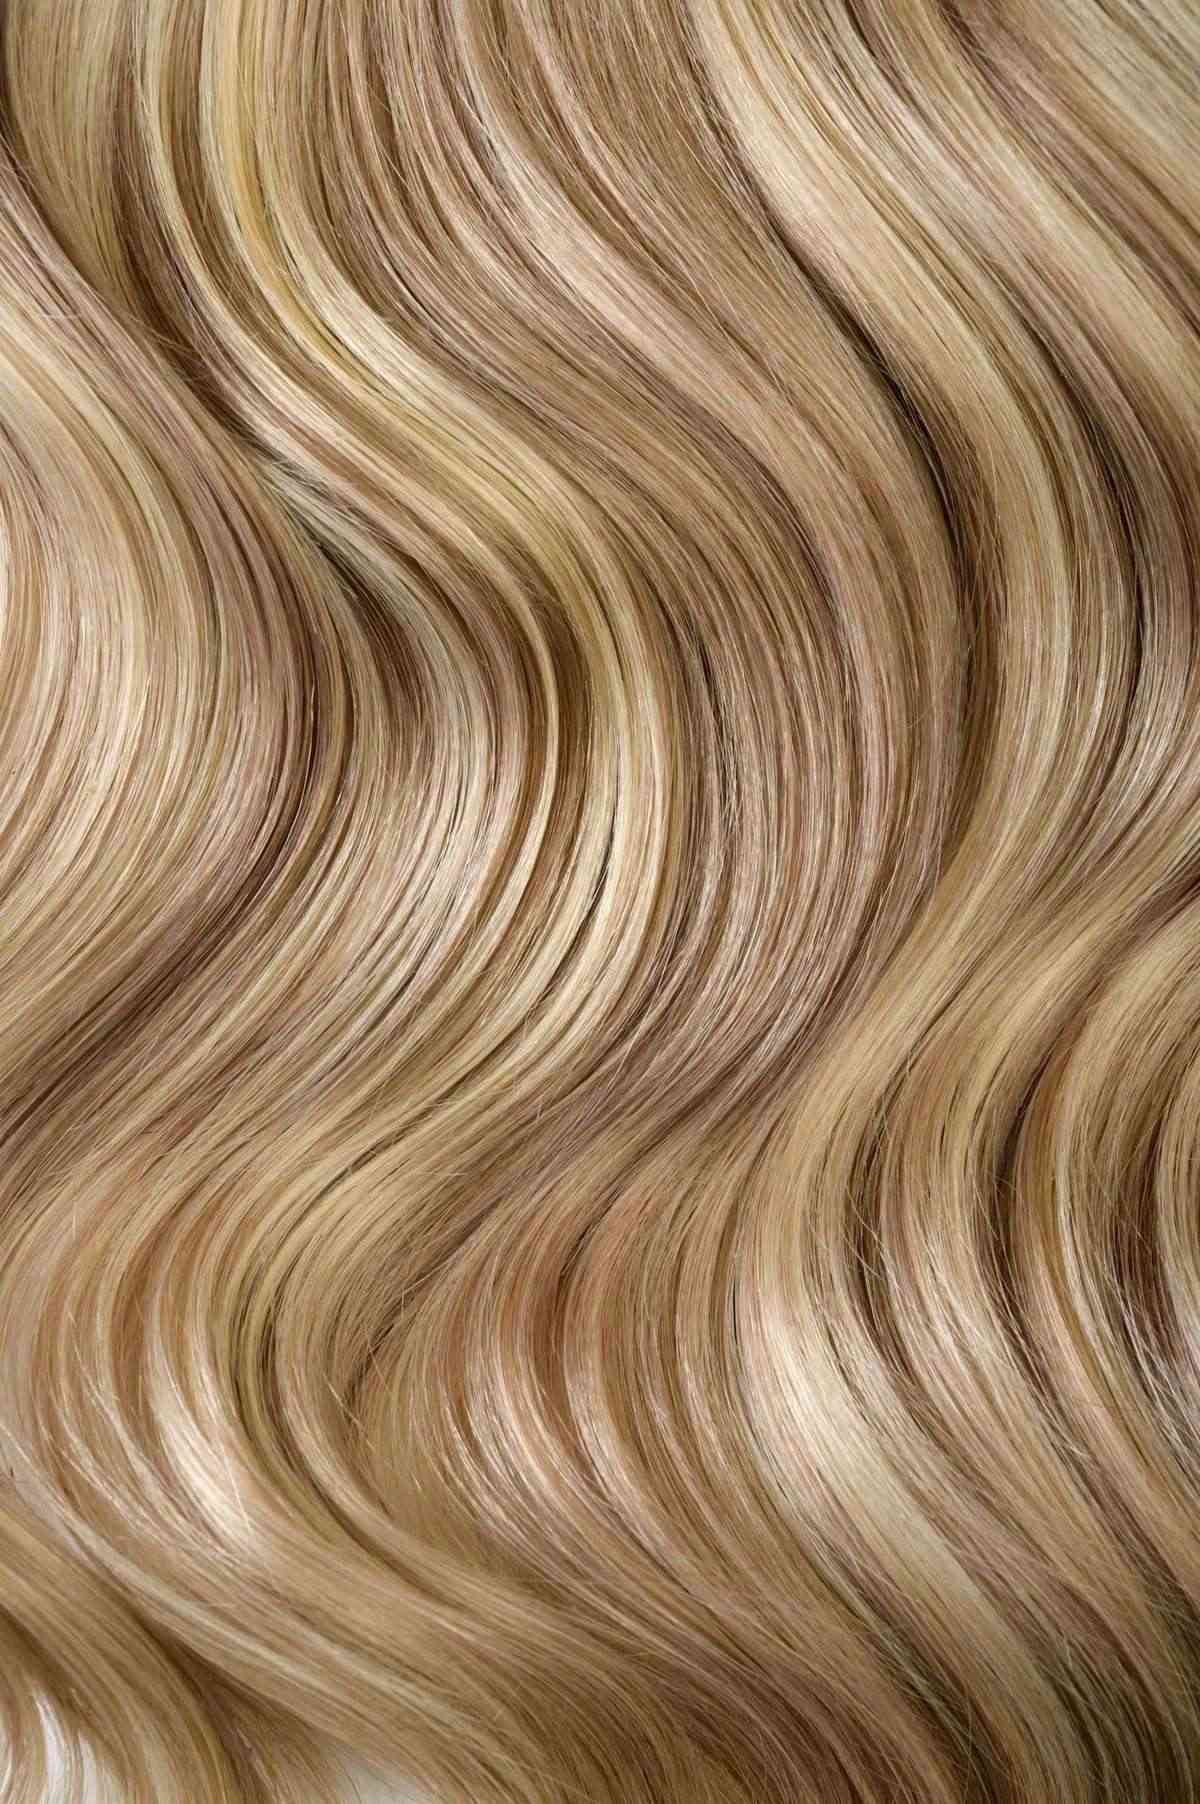 #18/613 Ash Blonde Highlights Genius Weft Hair Extensions